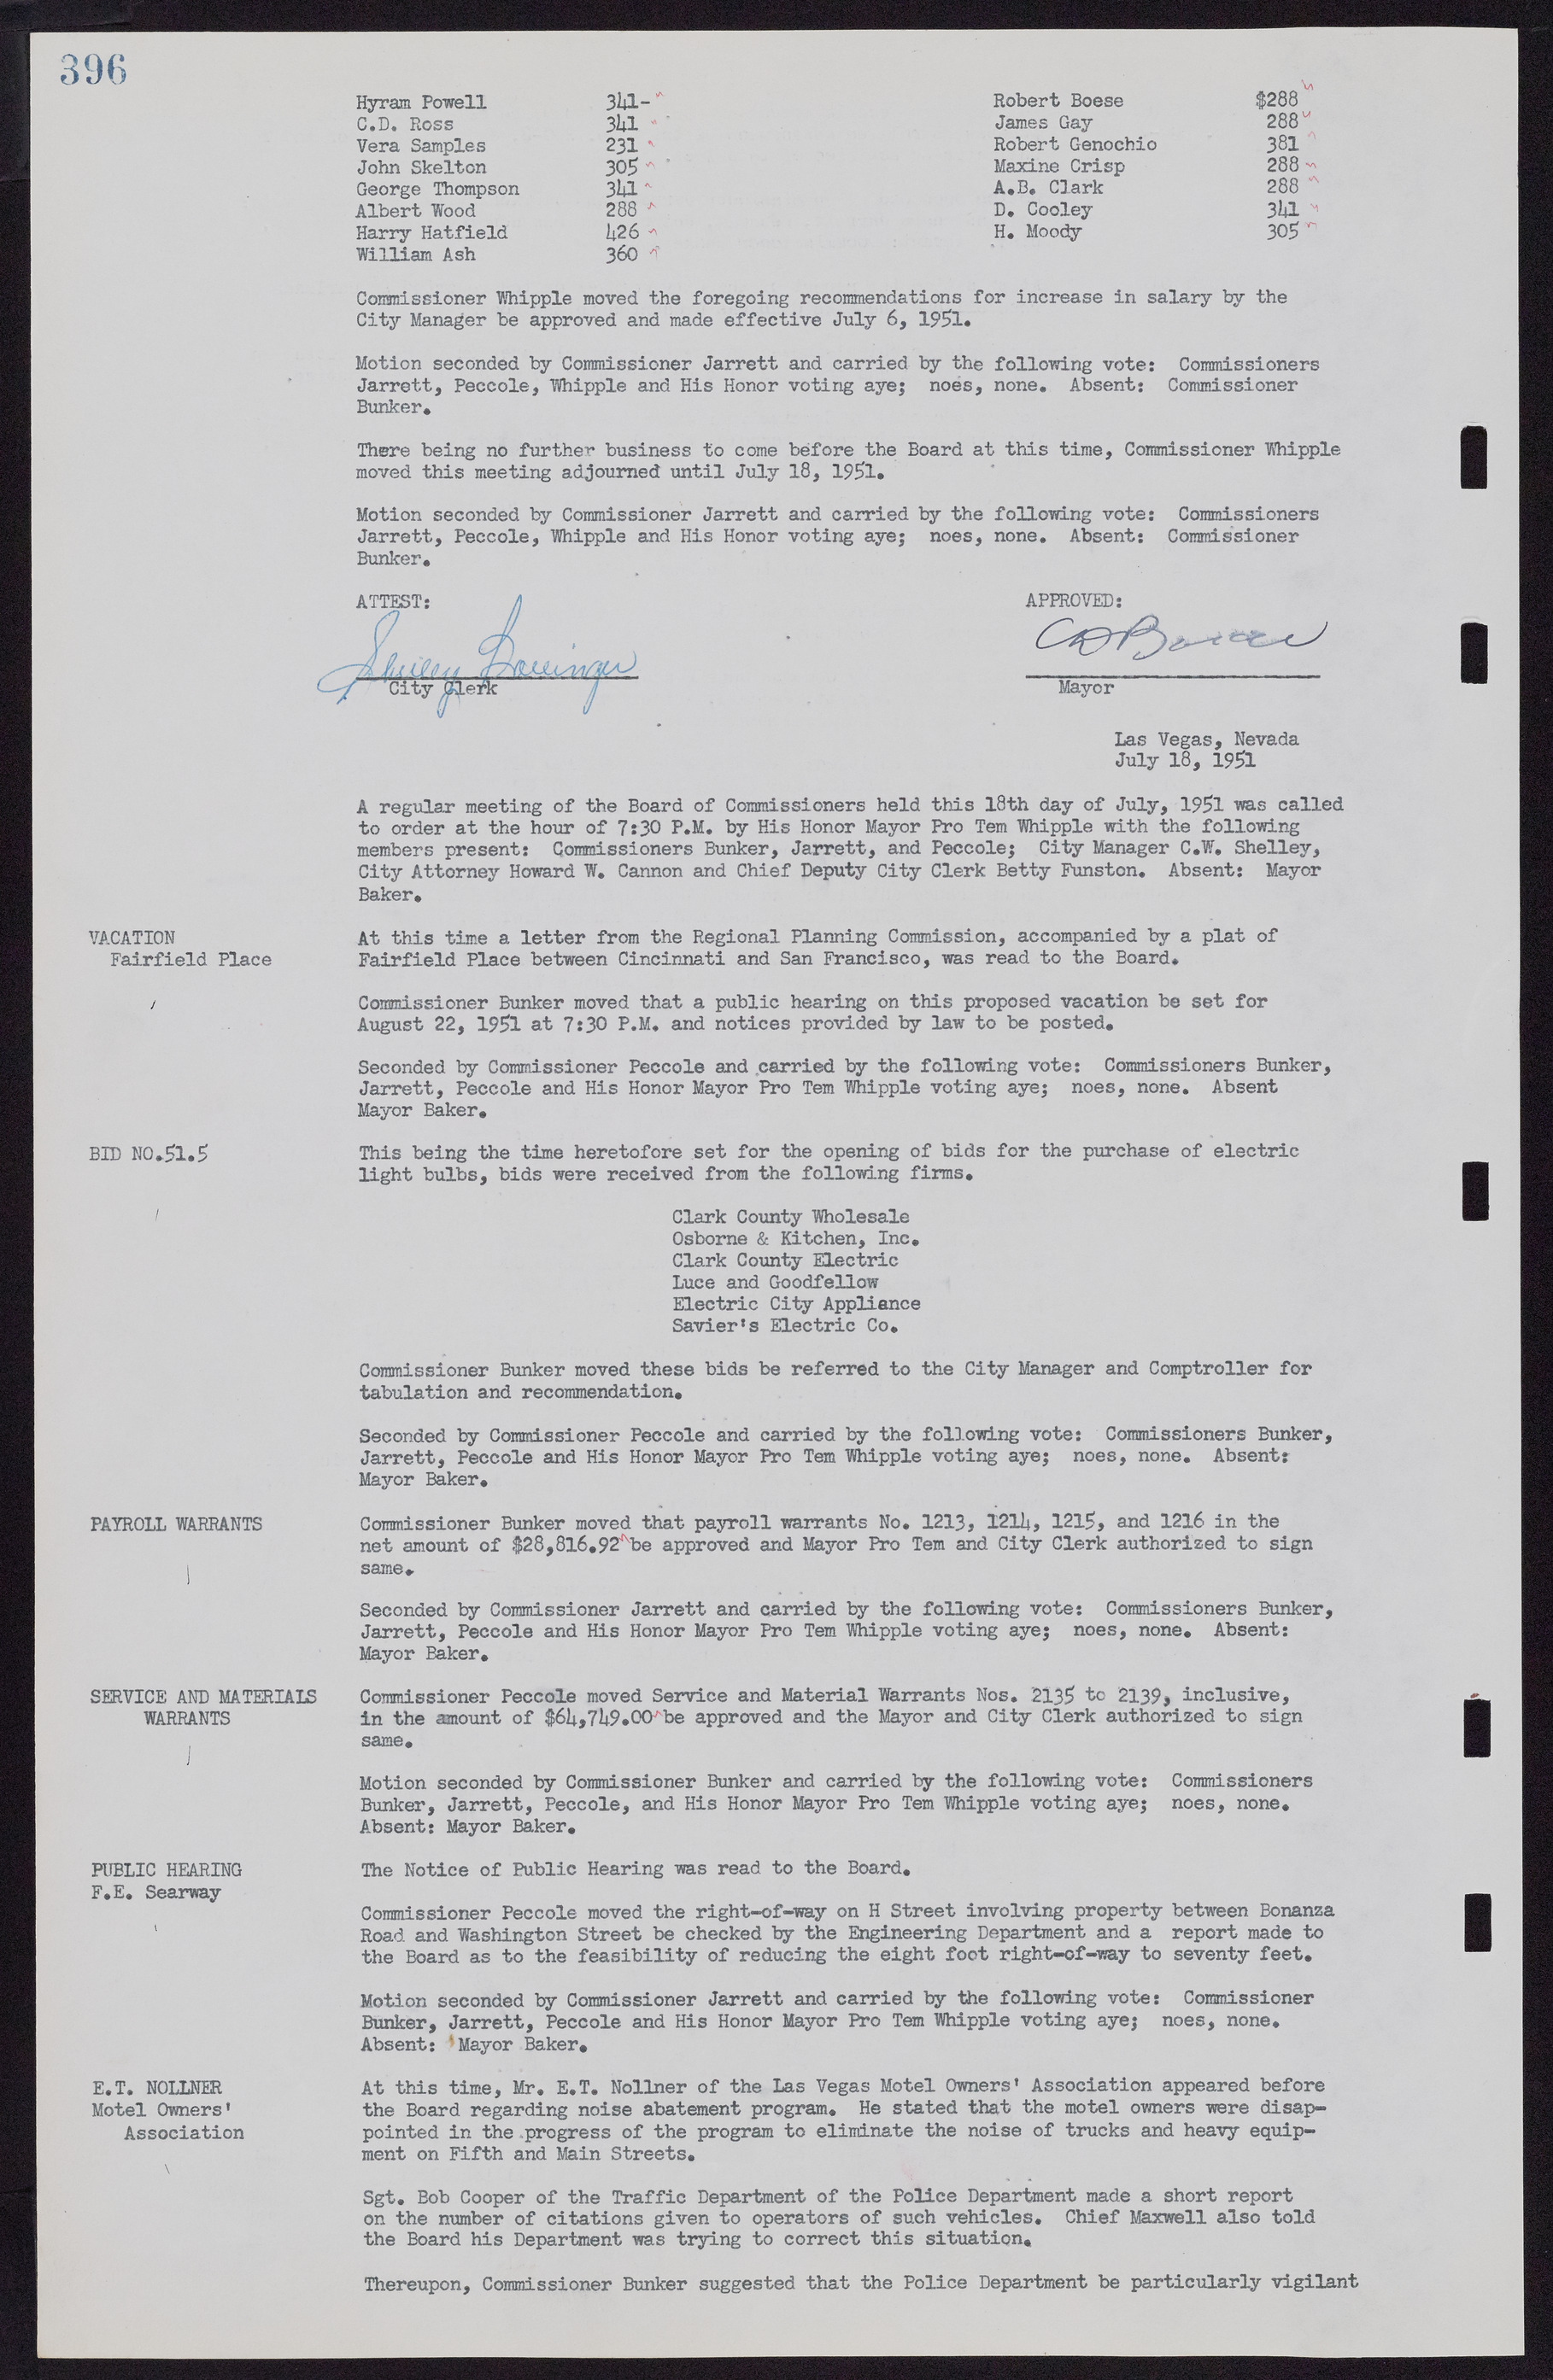 Las Vegas City Commission Minutes, November 7, 1949 to May 21, 1952, lvc000007-412